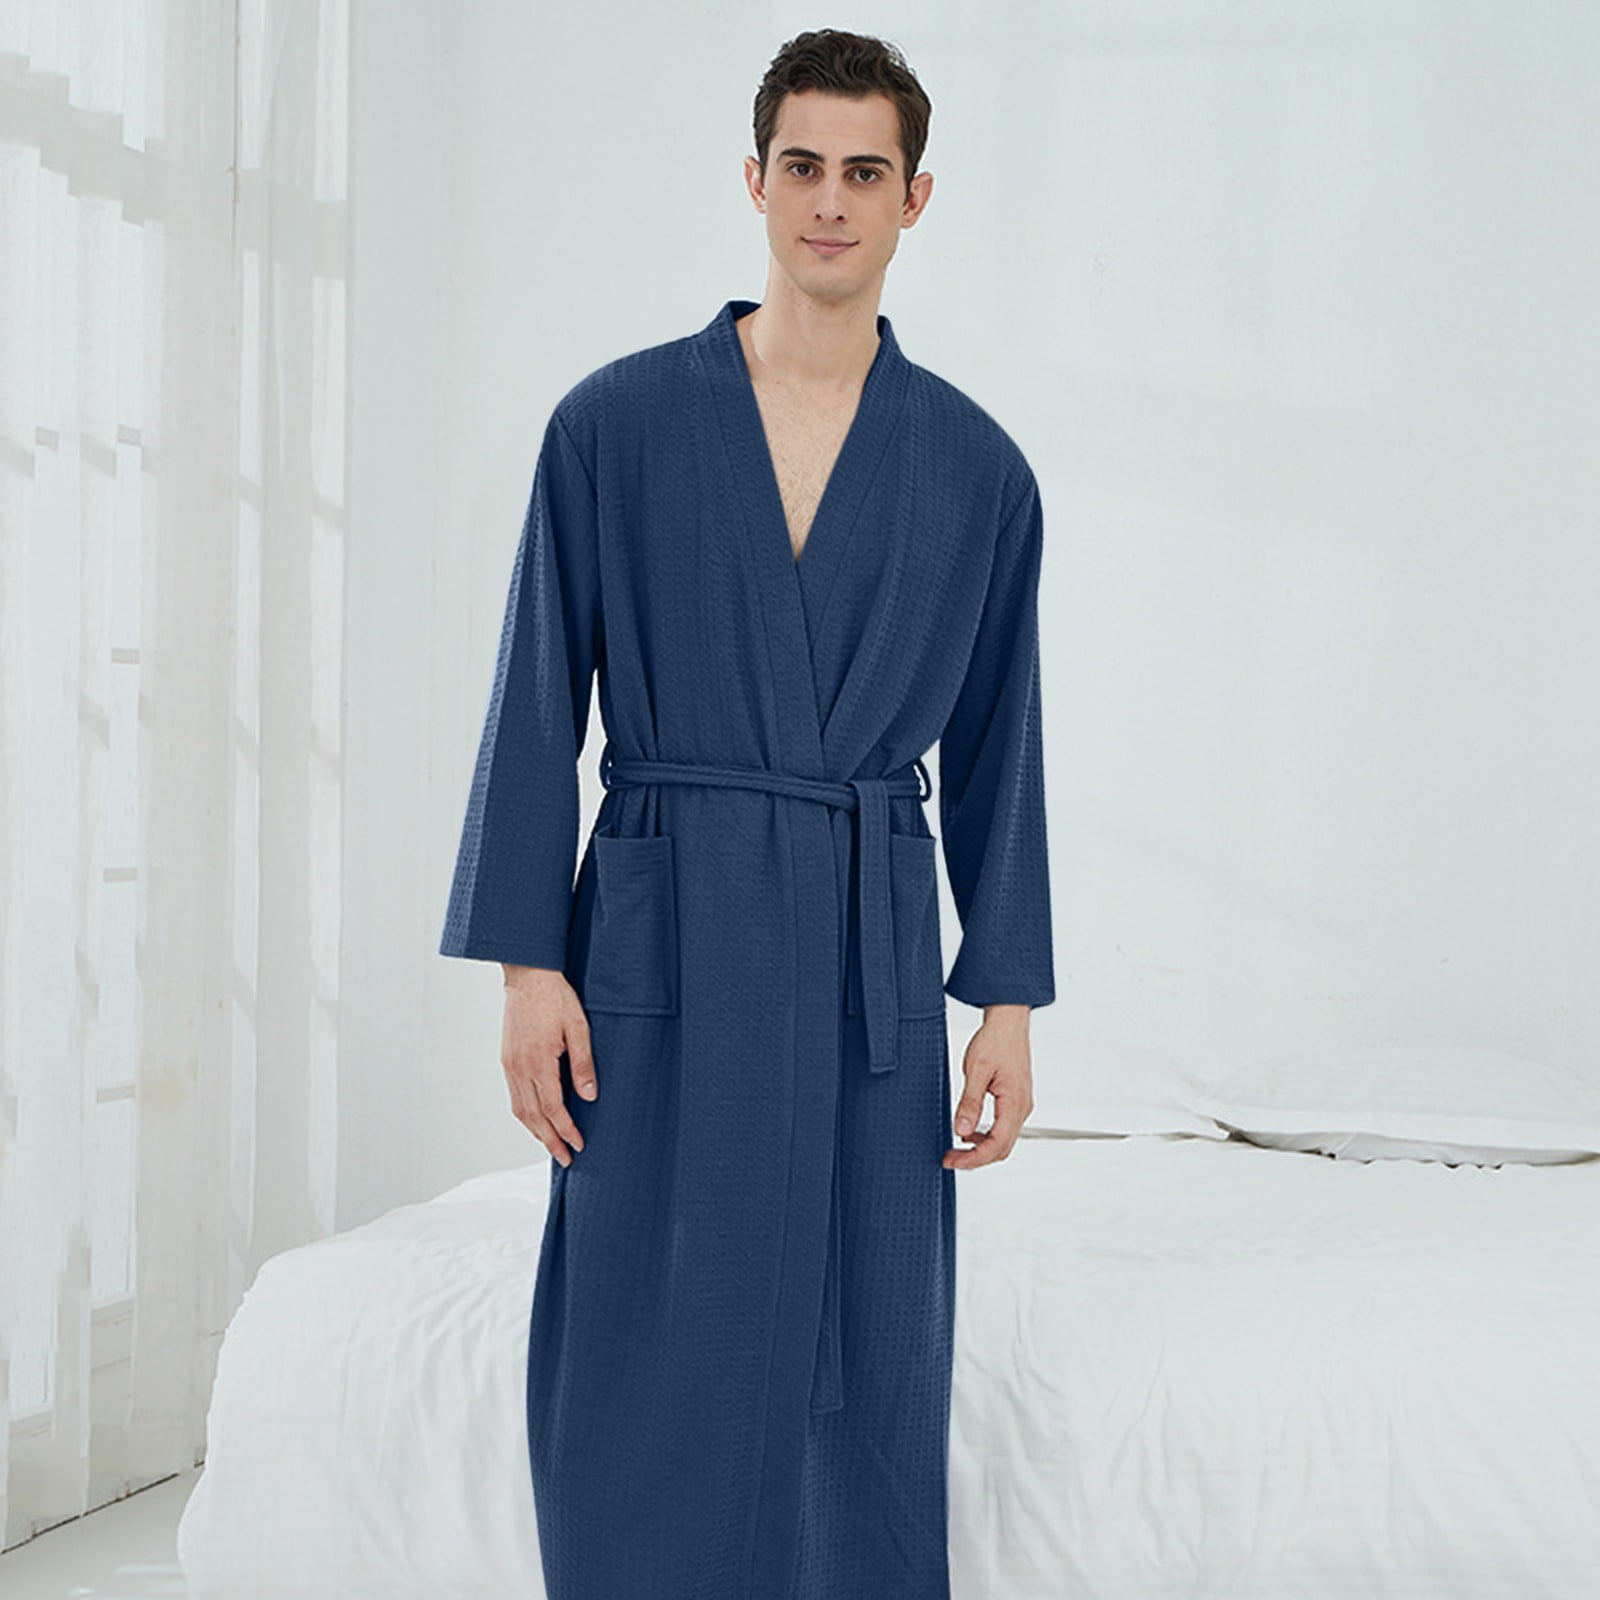 outfmvch pajamas for women ladies men couple cloth robe sleepwear white  blue polyester dressing gown kimono bath robe bathrobe for hotel home  lingerie